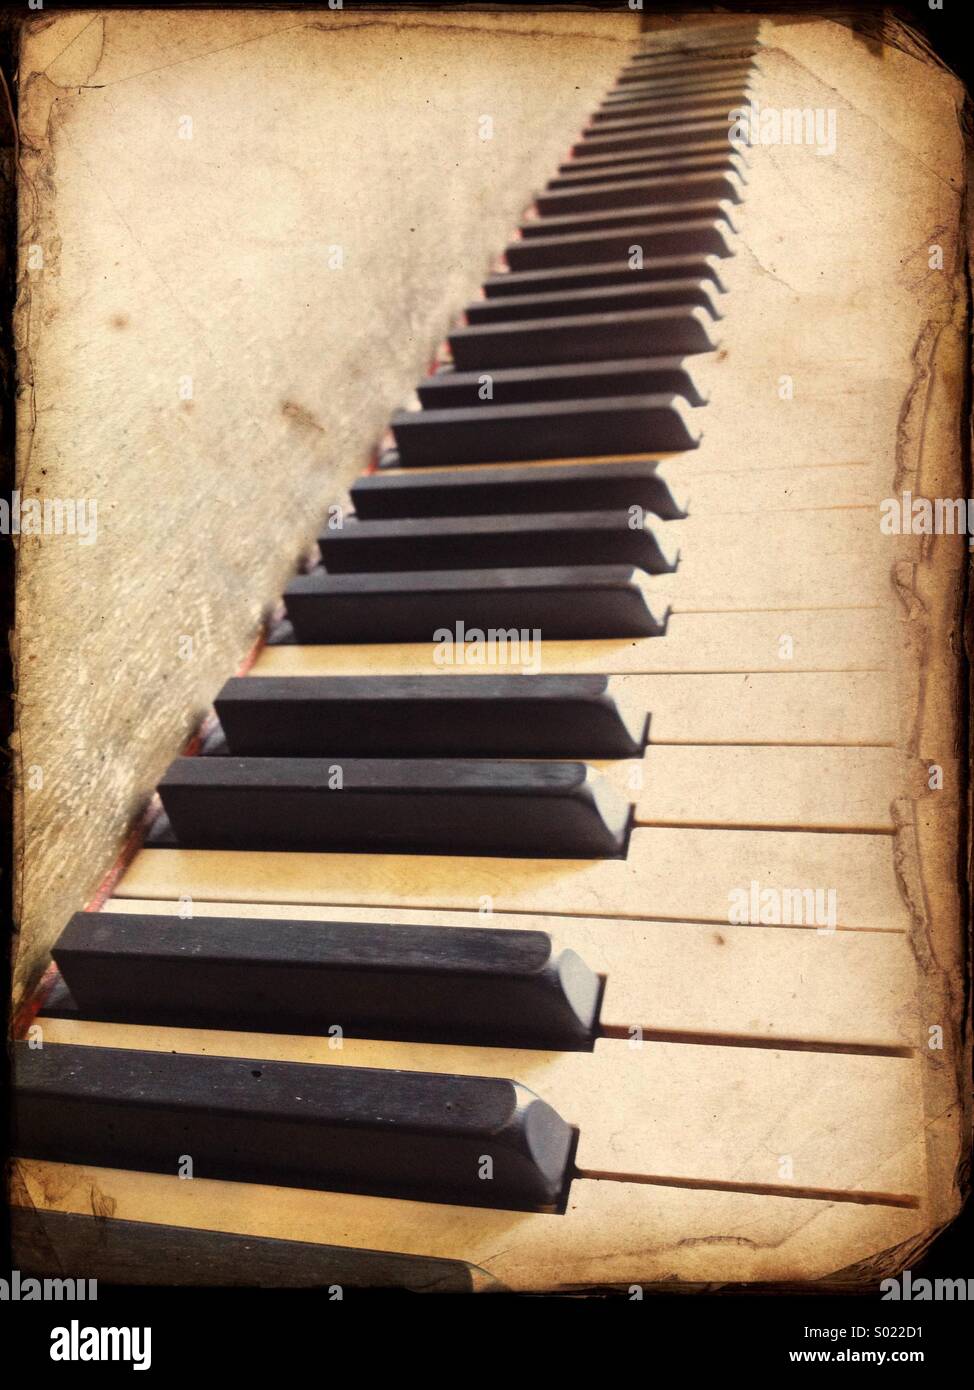 Old piano keyboard. Stock Photo